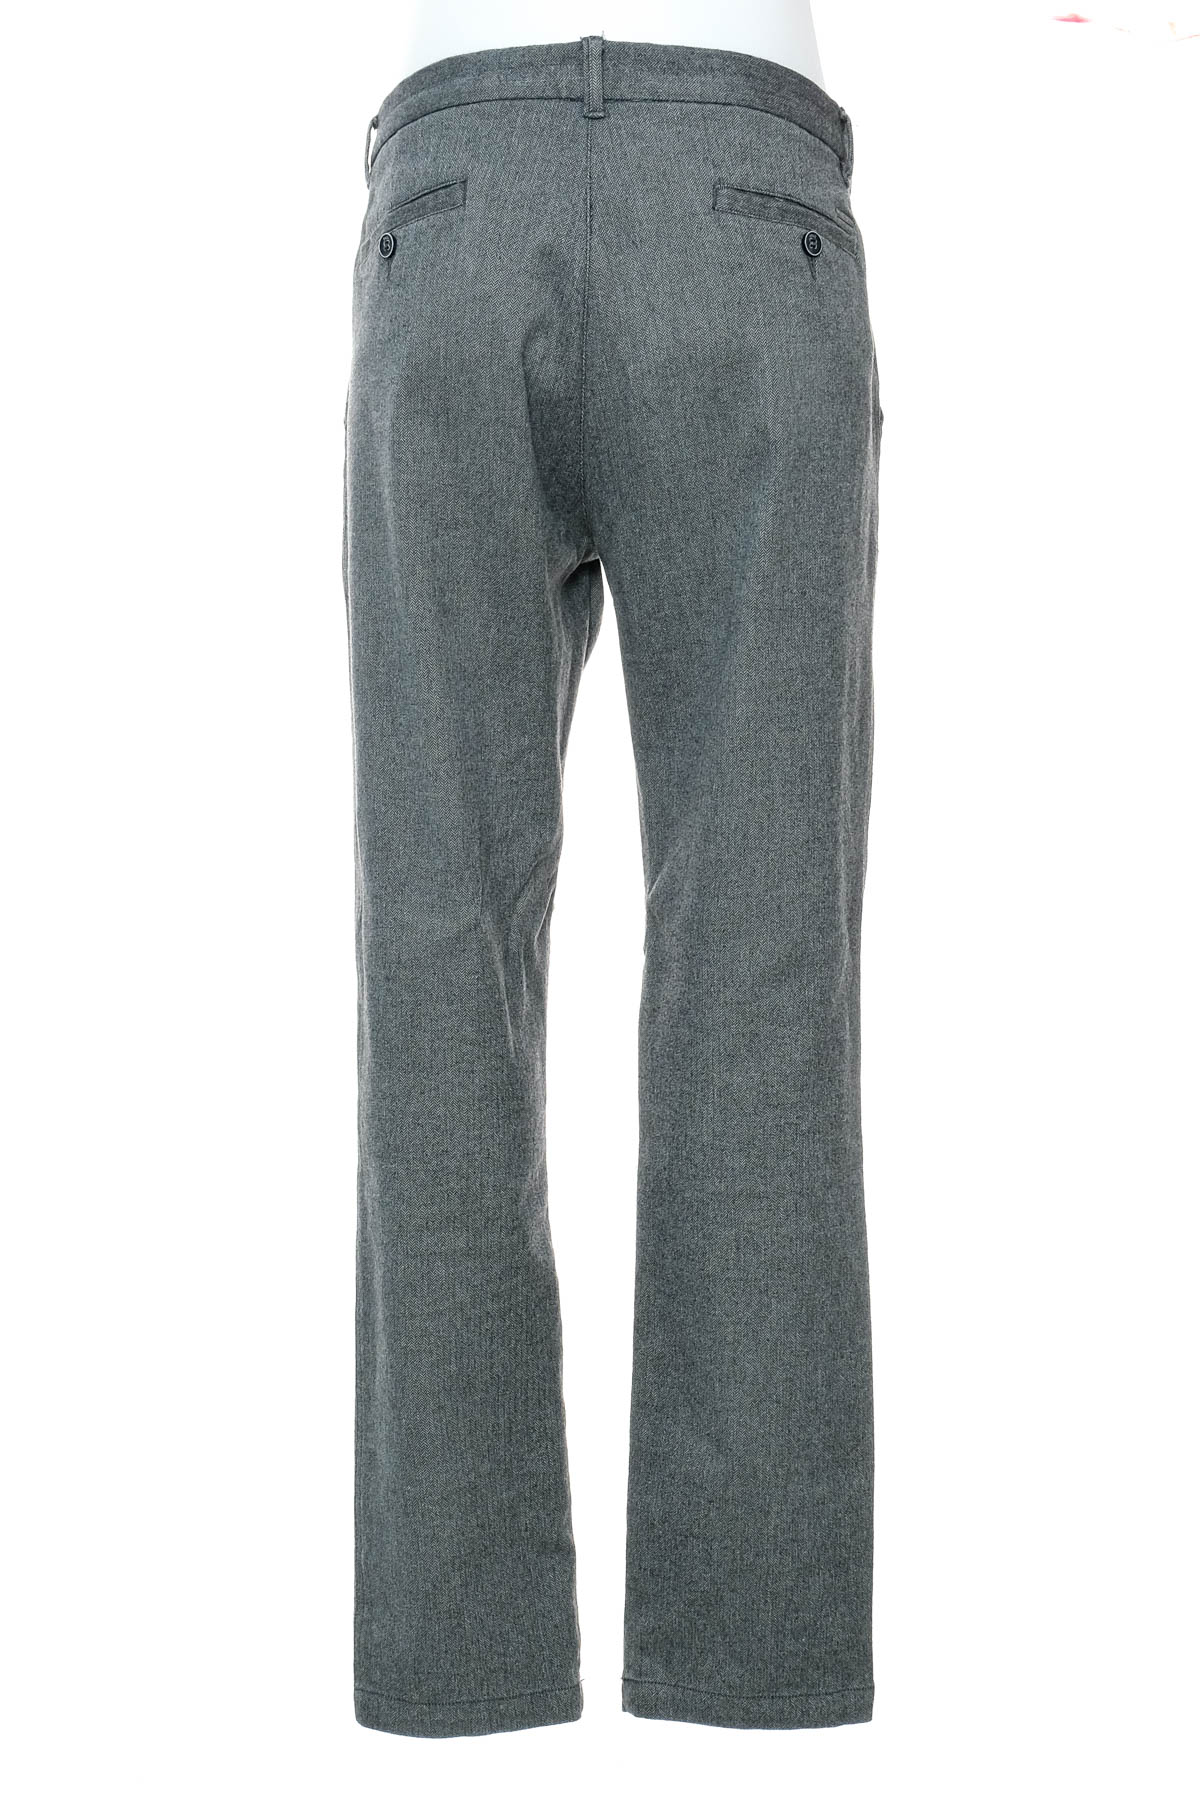 Men's trousers - Paul - 1